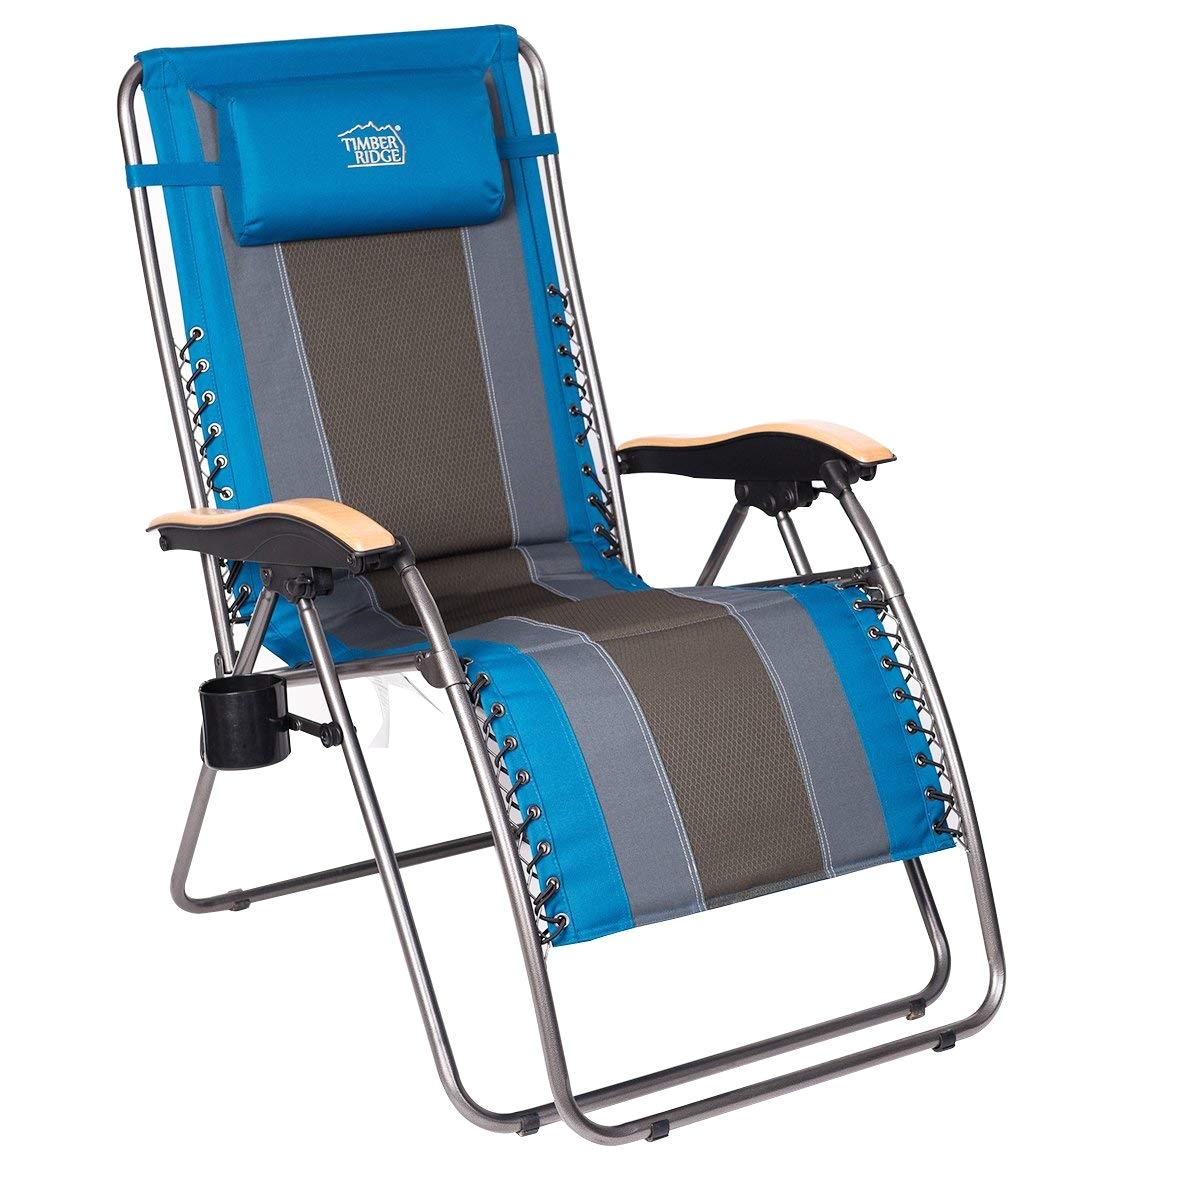 Timber Ridge Chairs Amazon Amazon Com Timber Ridge Zero Gravity Patio Lounge Chair Oversize